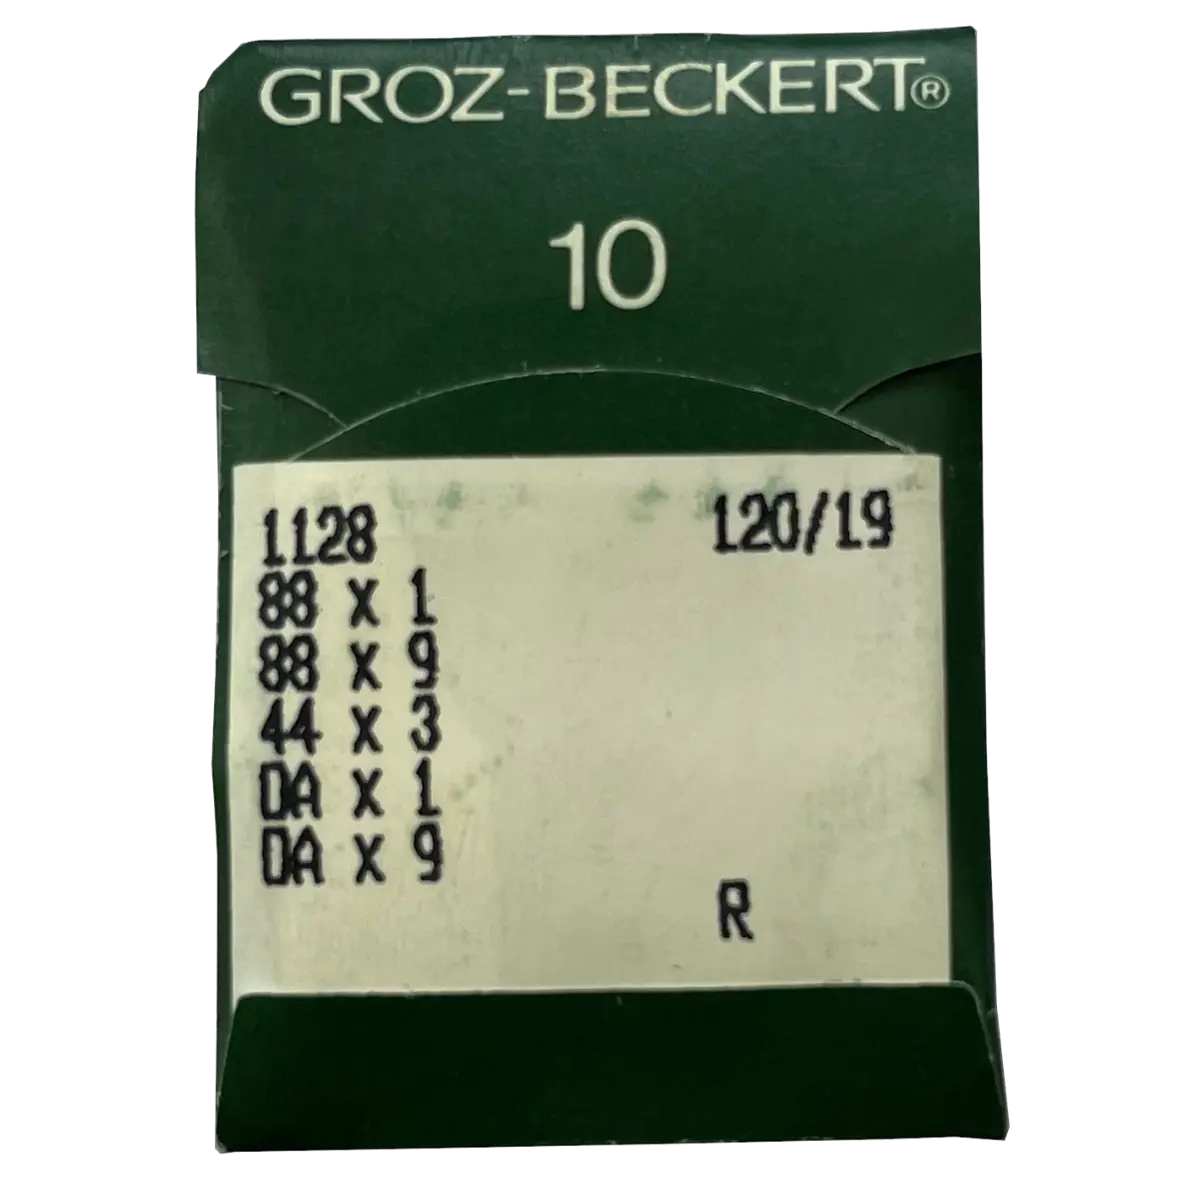 Groz-Beckert Industrial Needles System 88x1, 88x9, 44x3, DAx1, DAx9, 1128